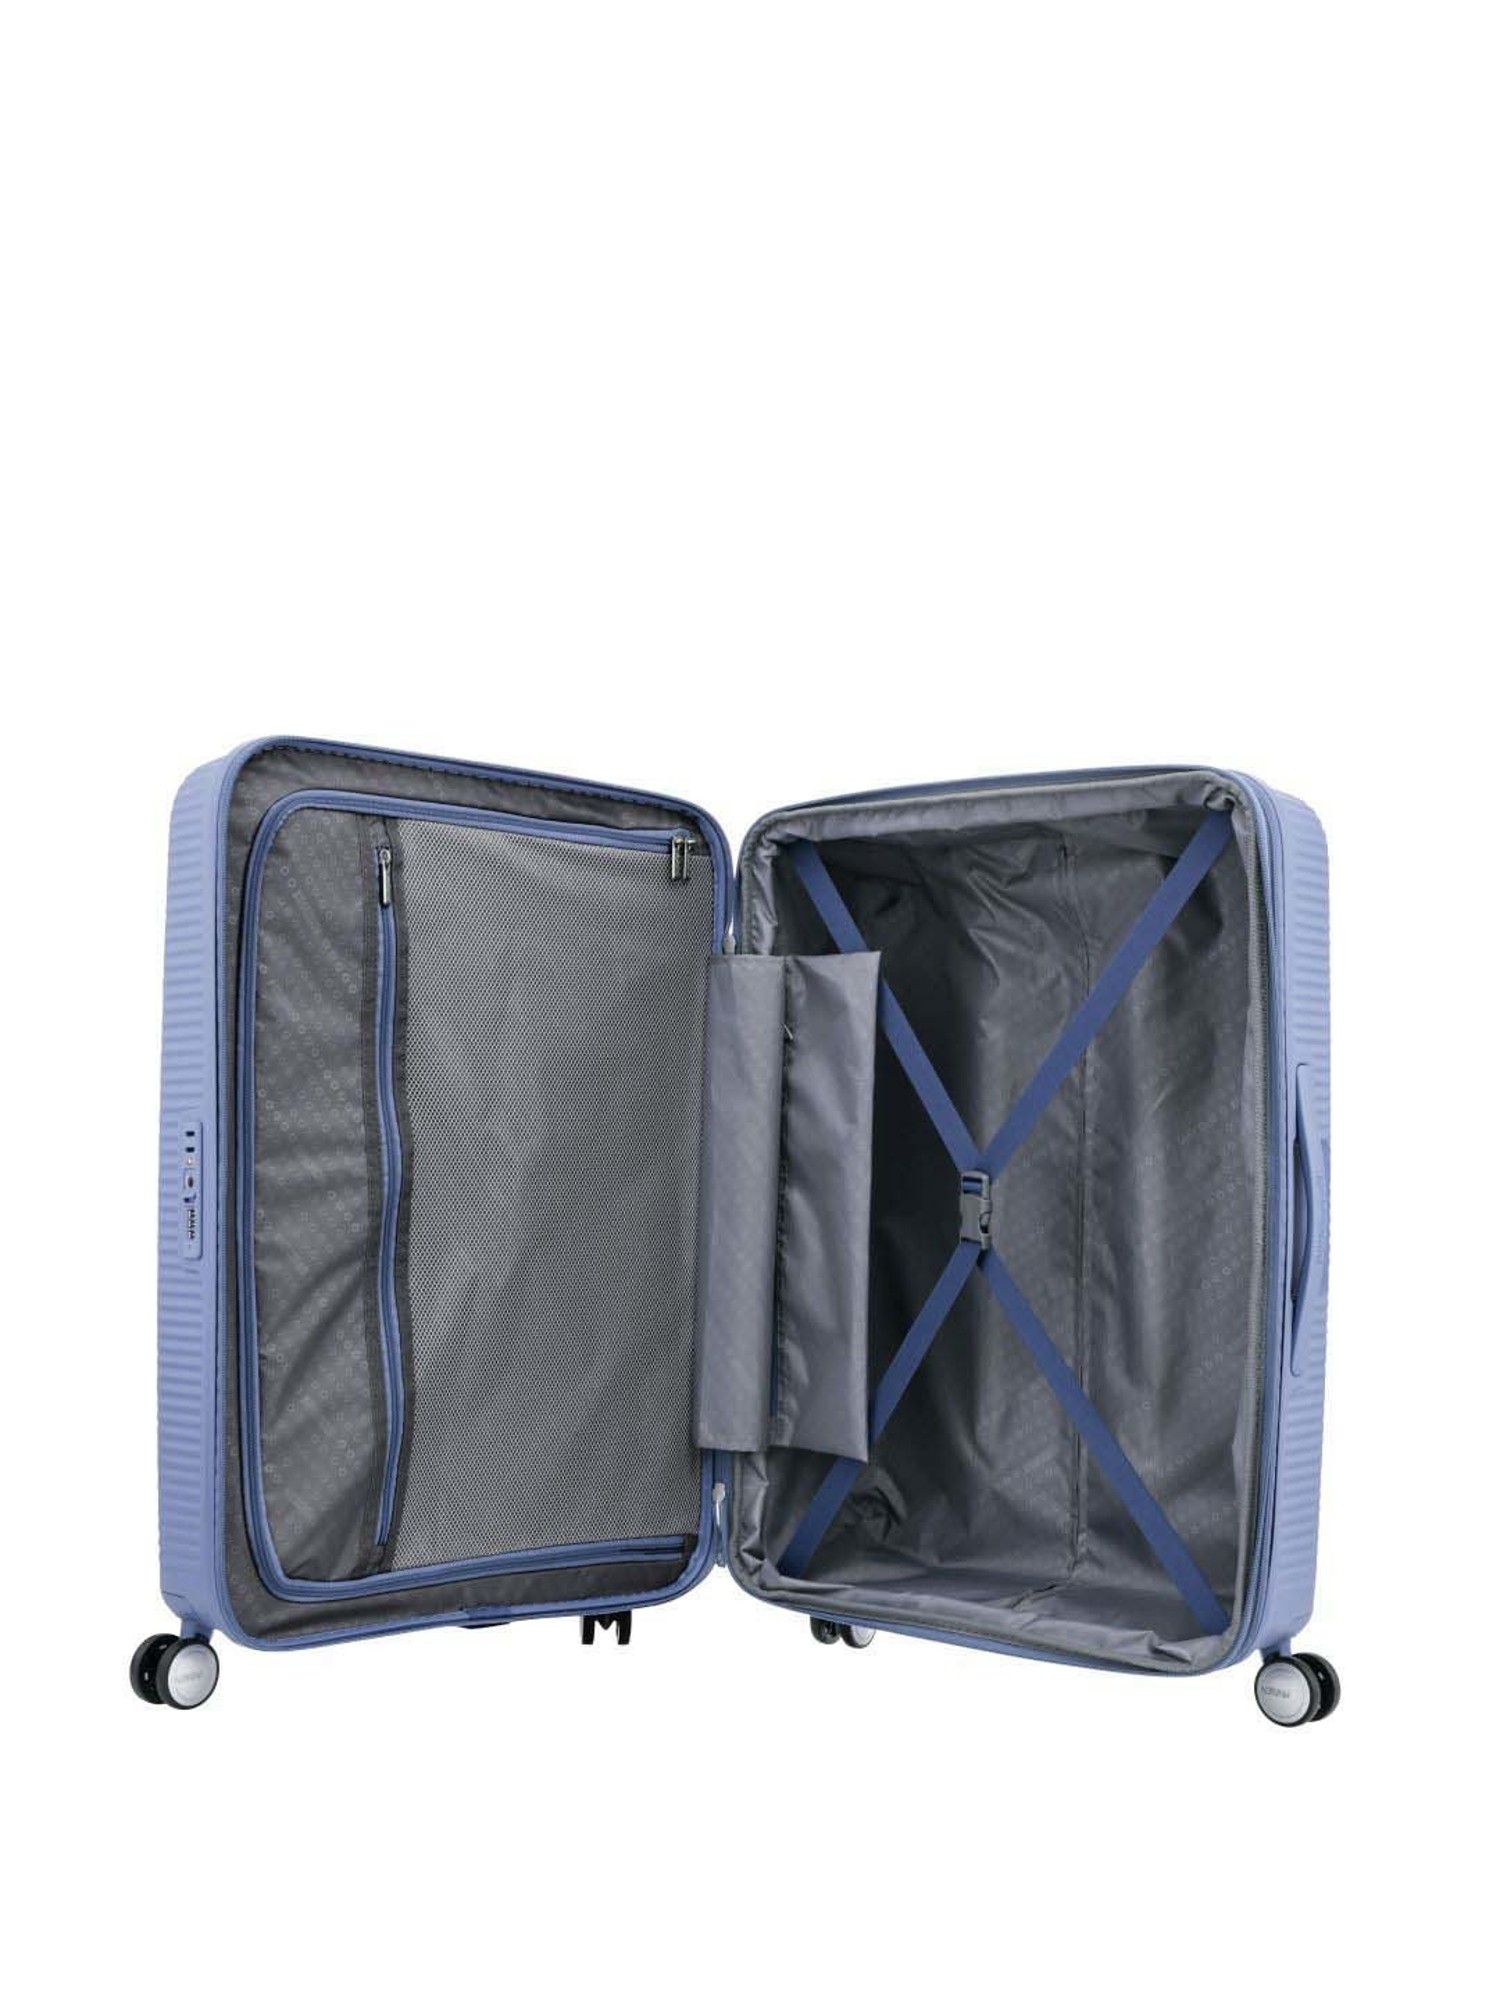 Buy Safari Persia Hardside Small & Medium Size (Cabin & Check-in)  Polycarbonate Luggage Set of 2 Spearmint Color 55cm & 65cm at Amazon.in